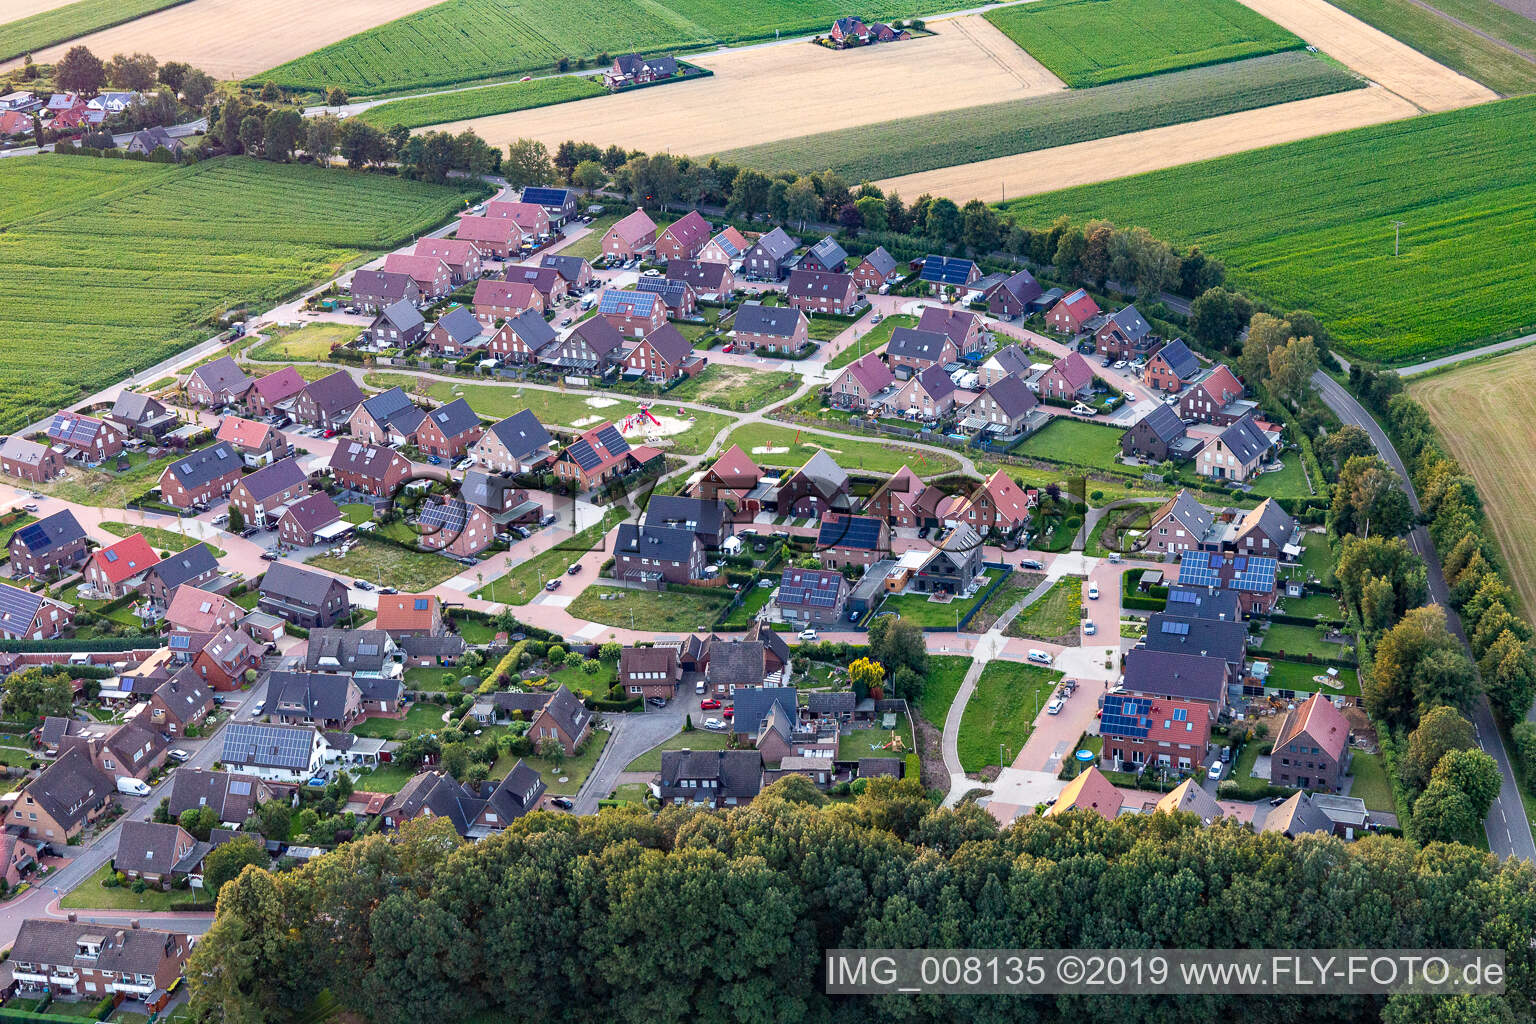 Aerial view of Heiden in the state North Rhine-Westphalia, Germany